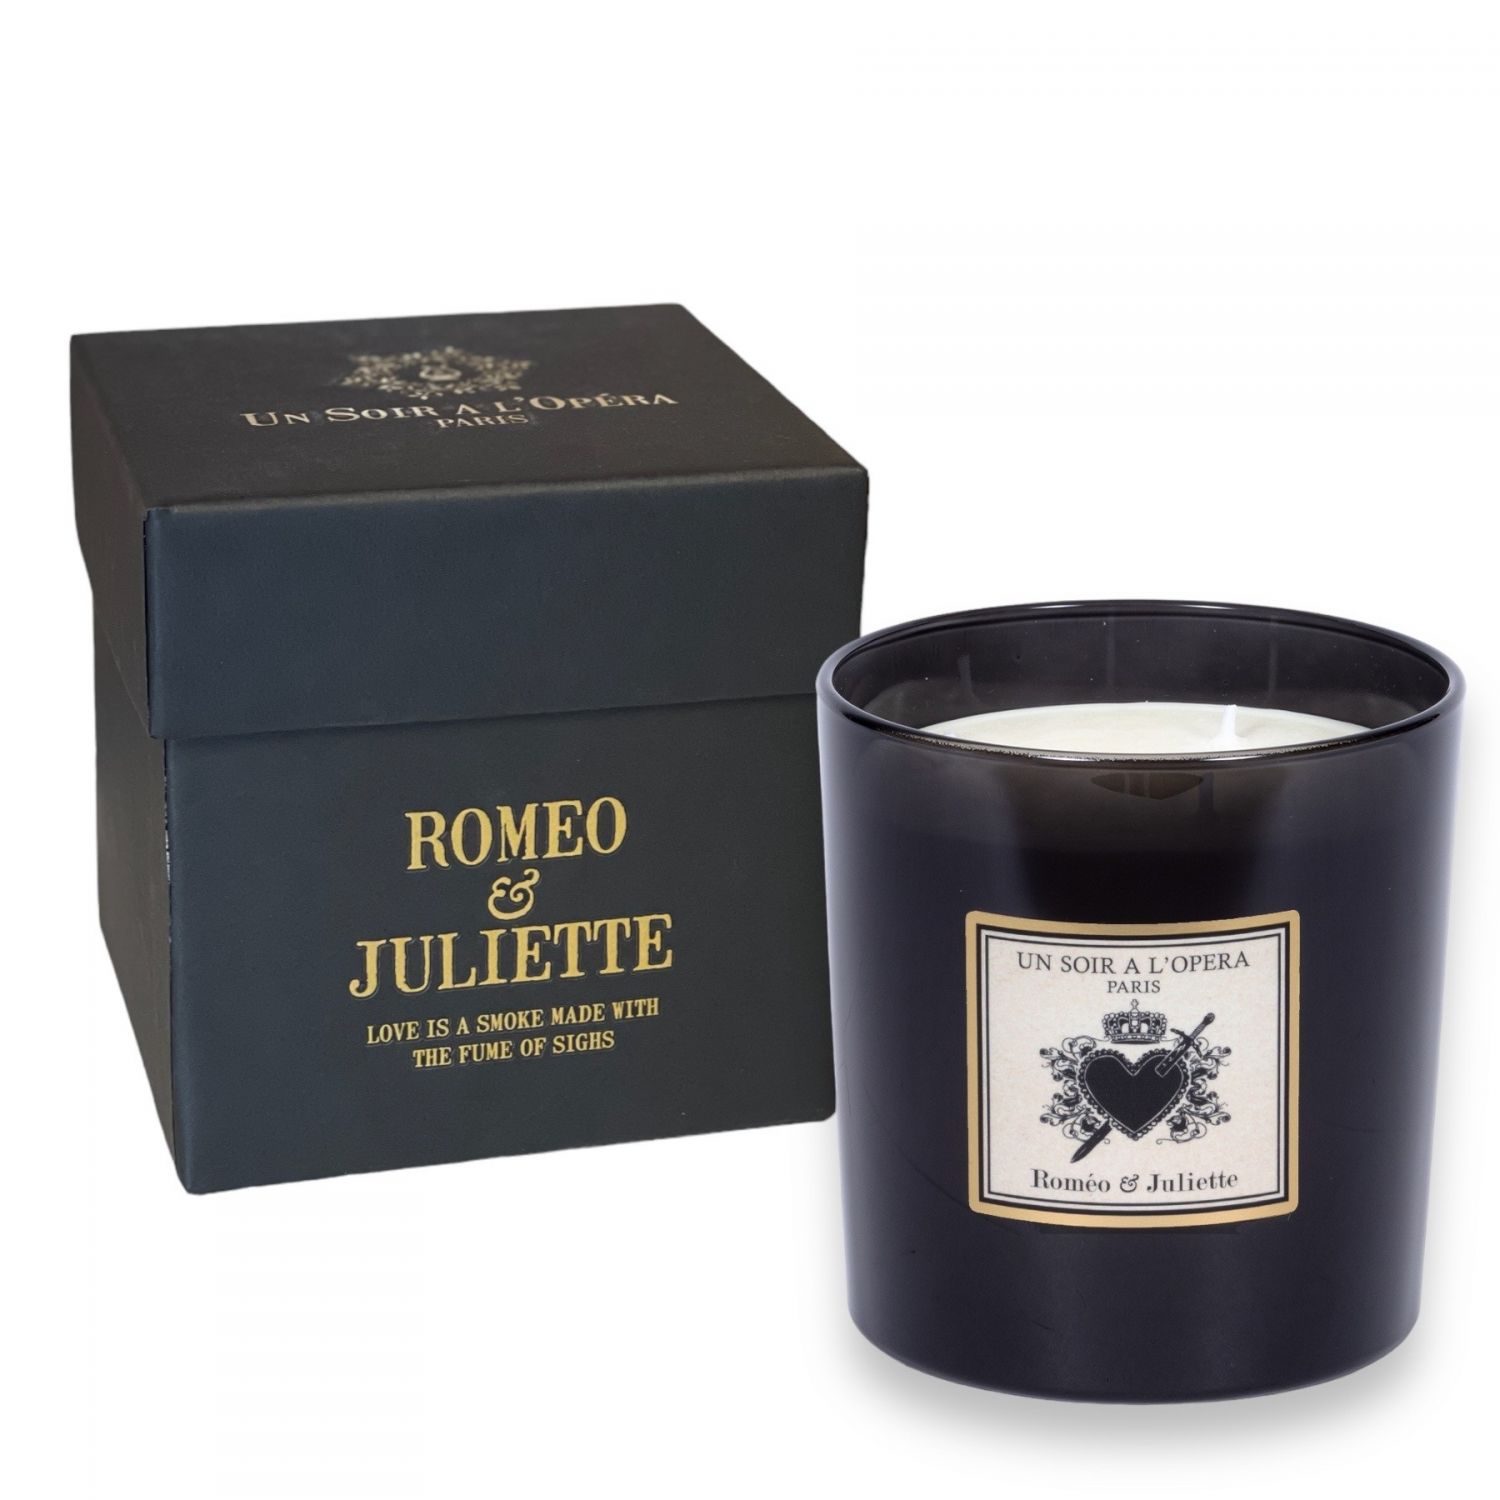 ROMEO & JULIET - Christmas Luxury scented candle 550g - Night jasmine - 2 units minimum